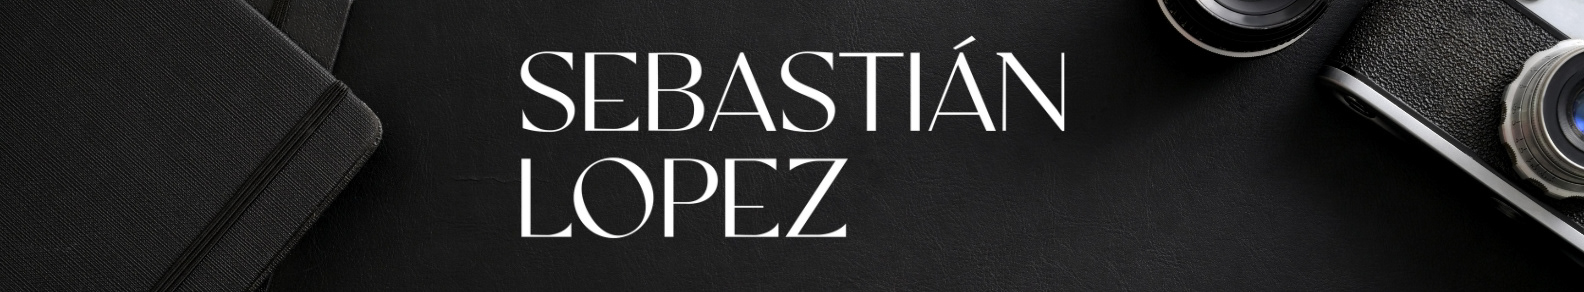 Sebastian Lopez's profile banner